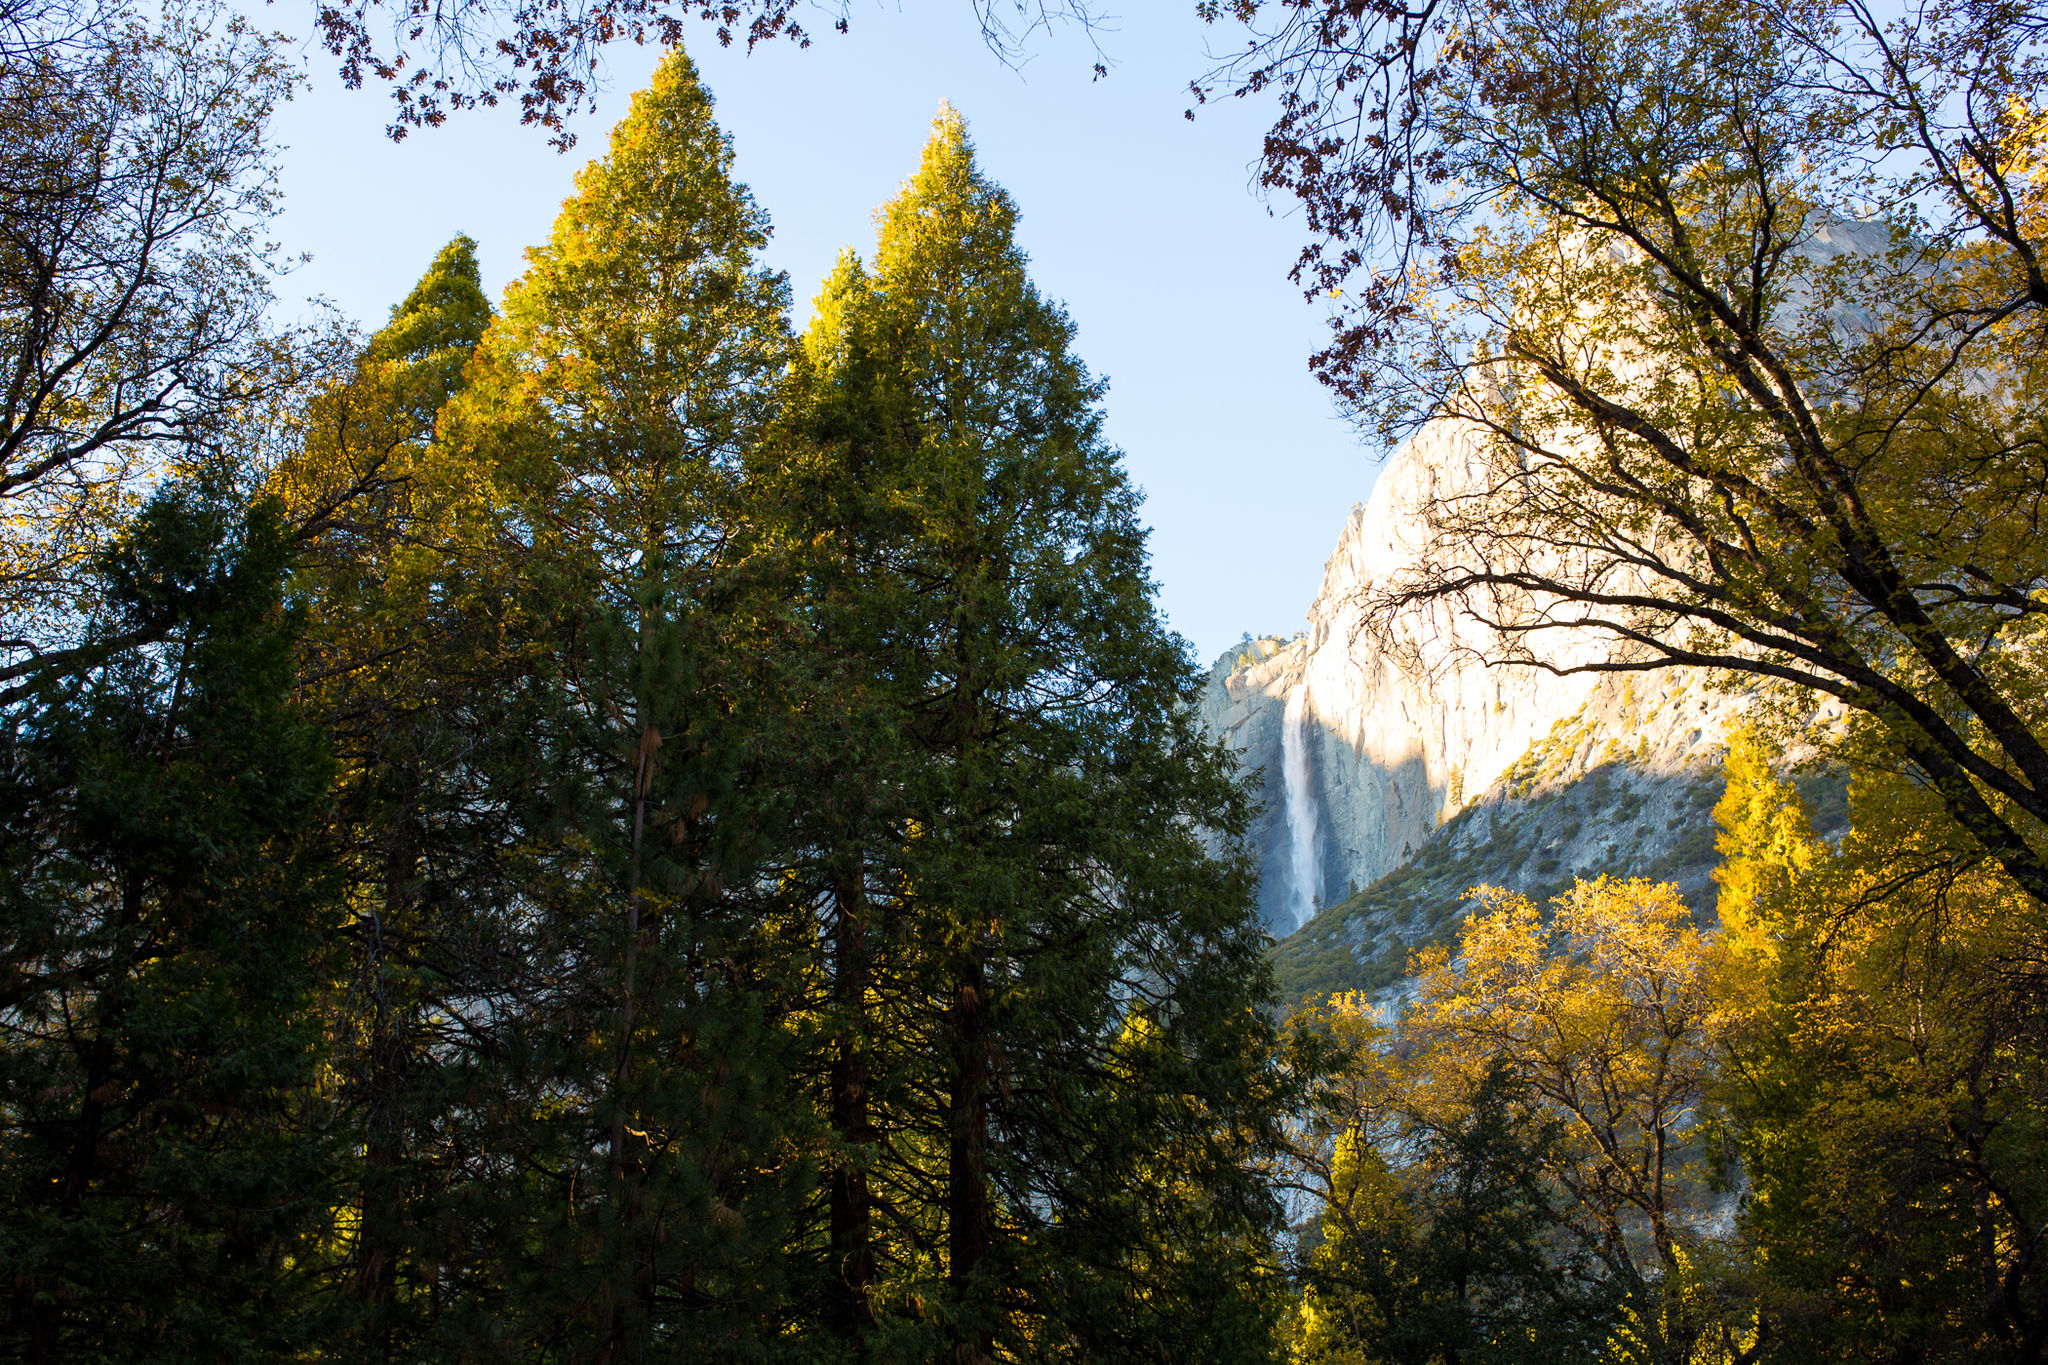 A nice view of Lower Yosemite Falls